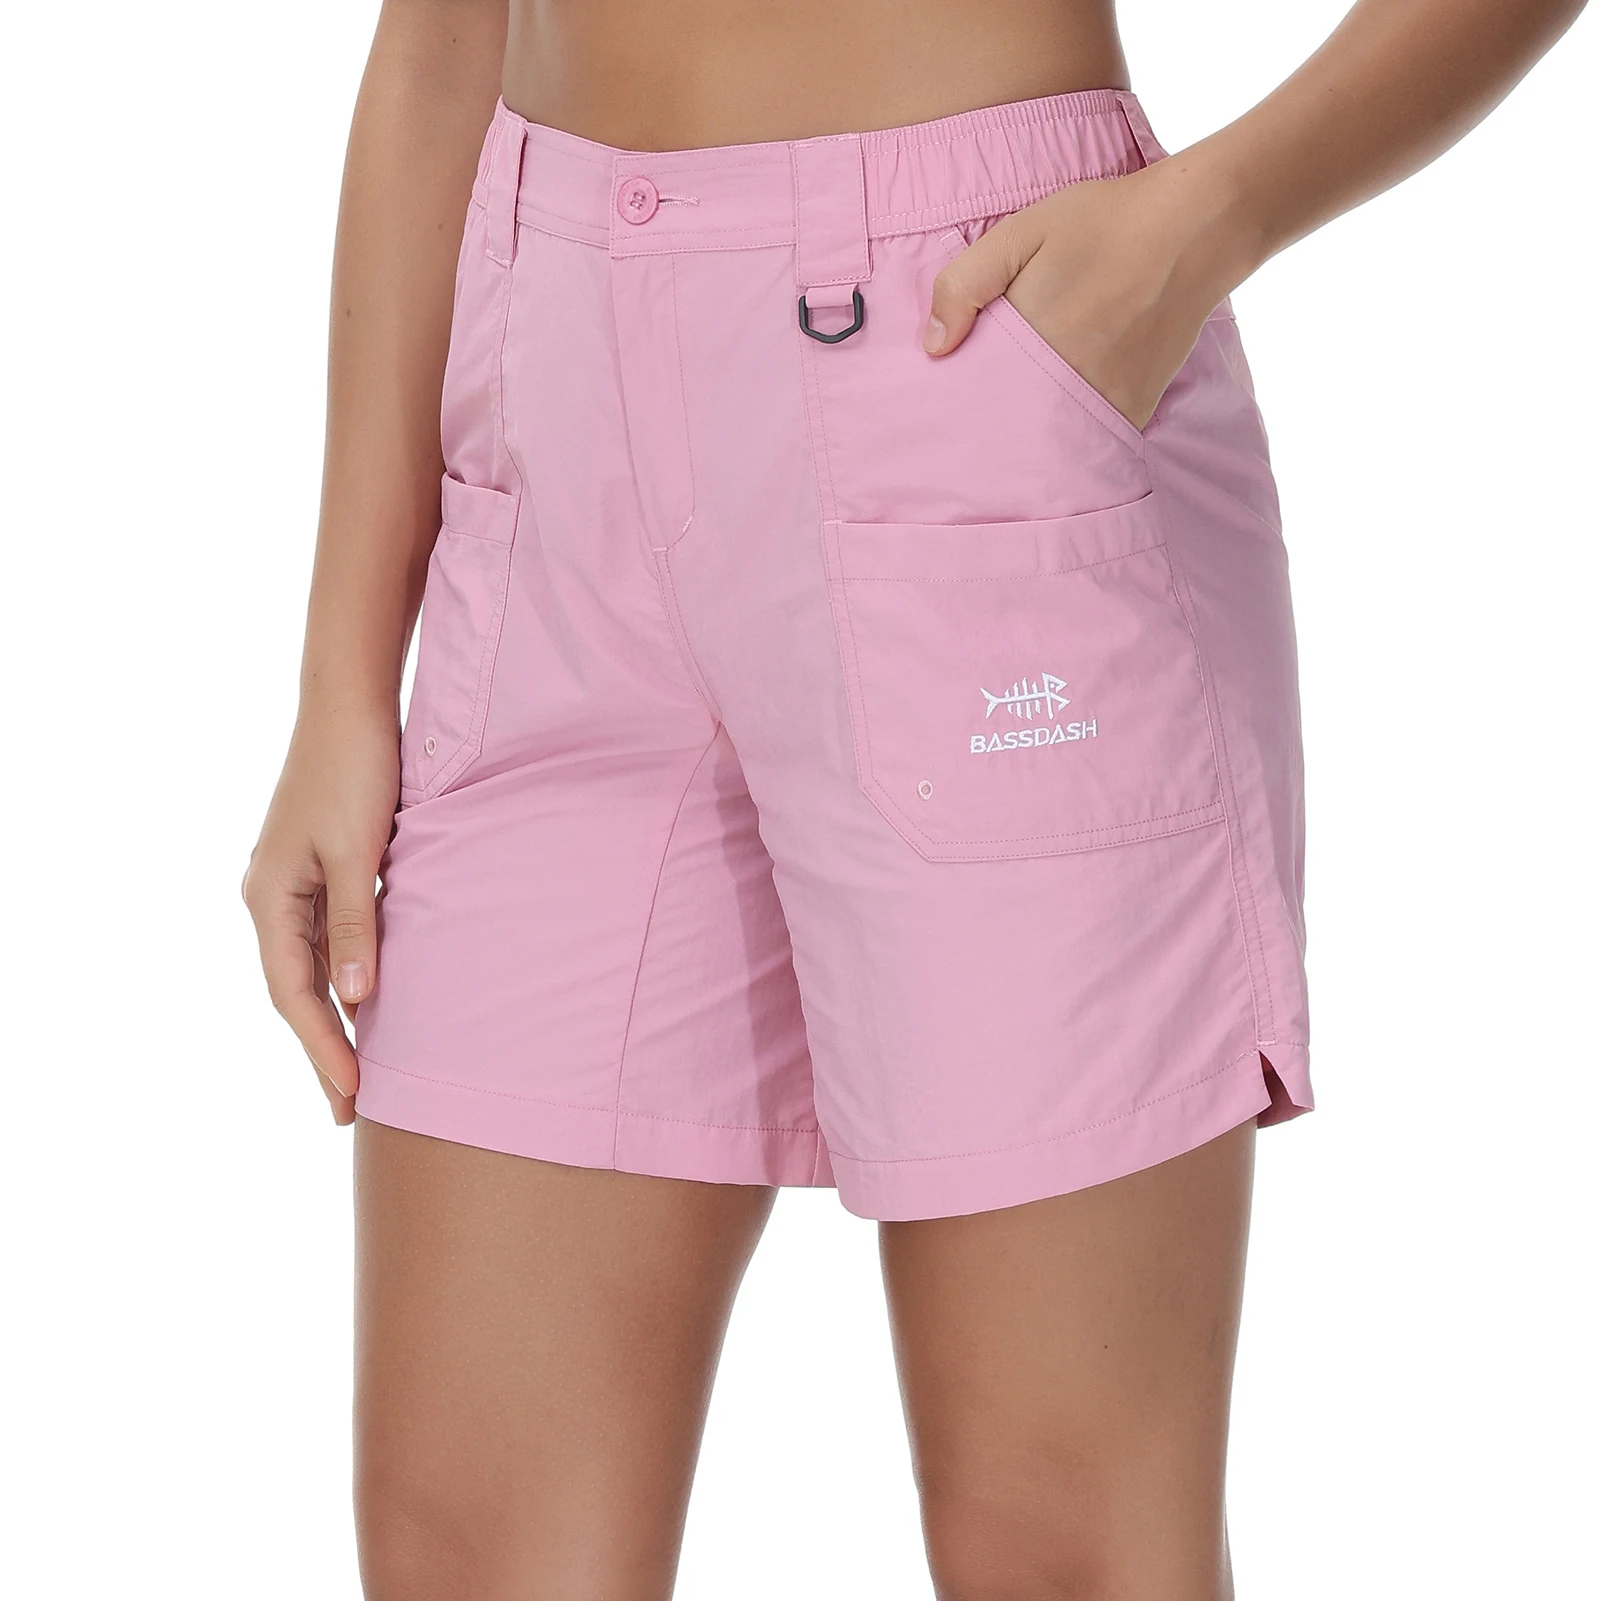 Bassdash Fishing Shorts For Women UPF 50+ Quick Dry Lightweight Hiking Cargo  Short Pants With Pockets FP03W - AliExpress